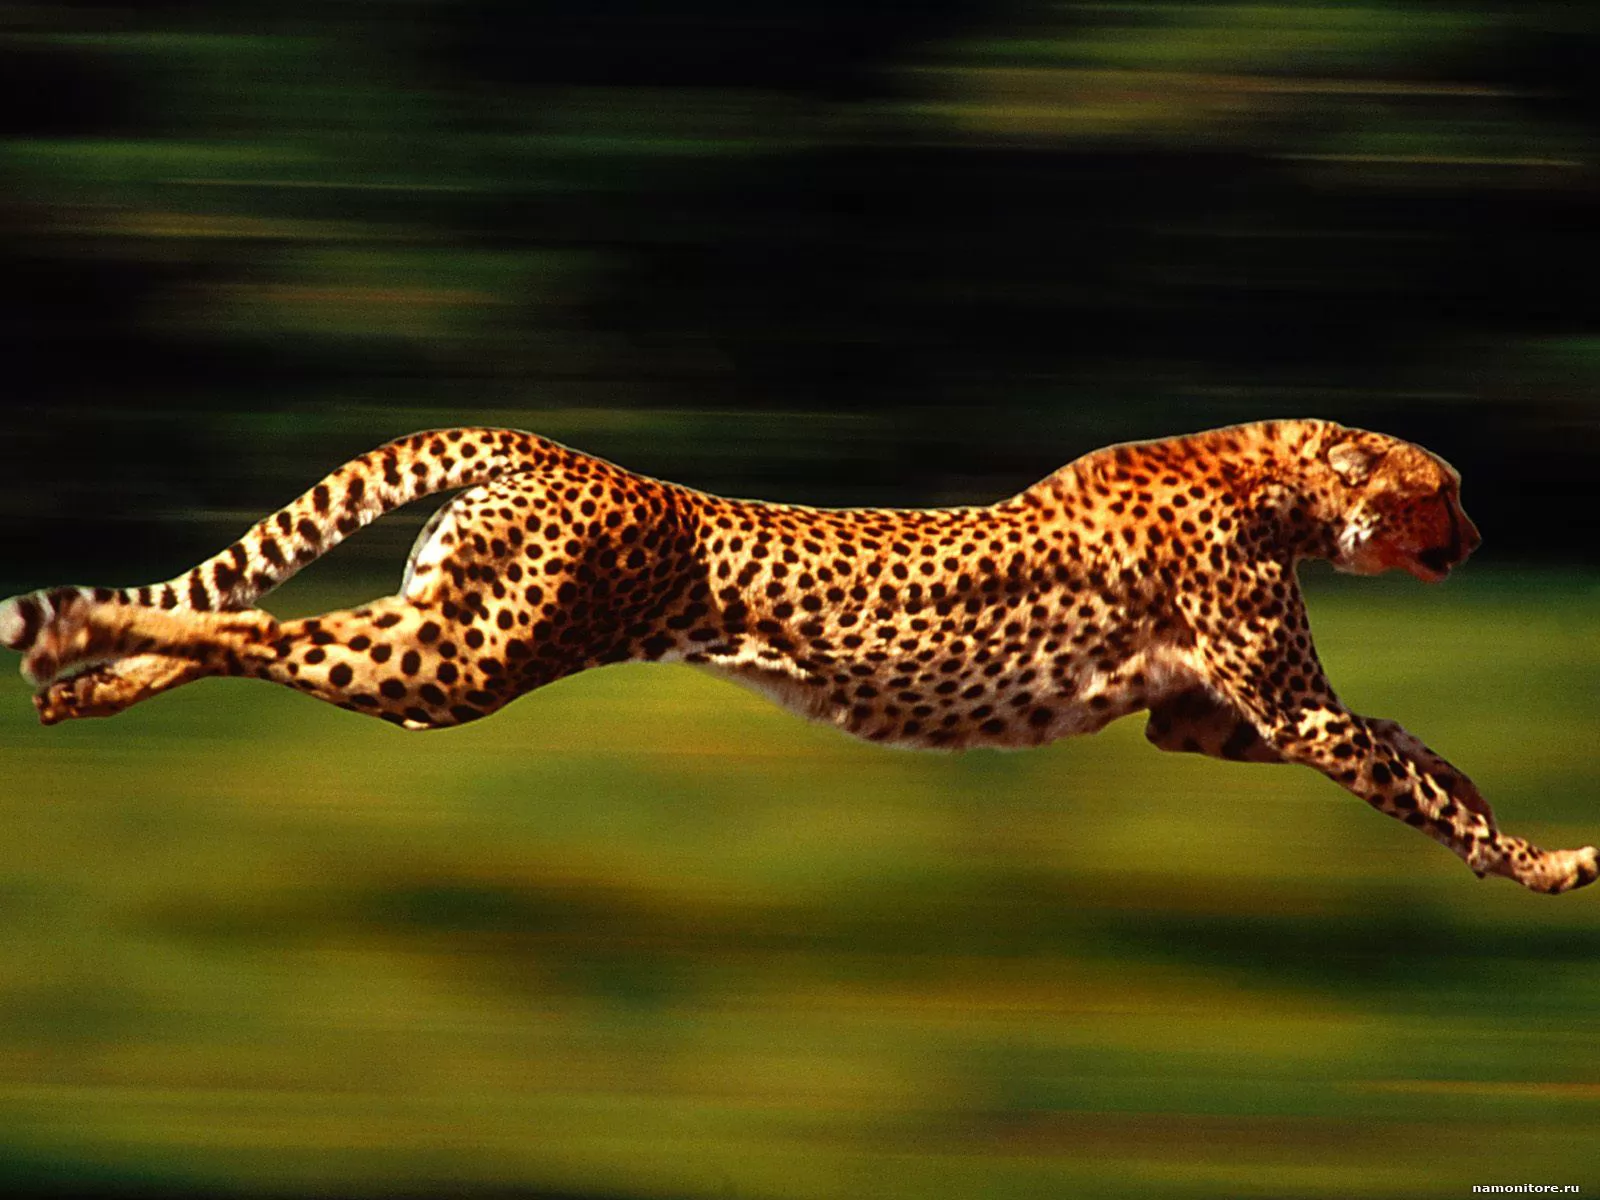 On the fifth transfer, animals, cats, cheetahs, run x